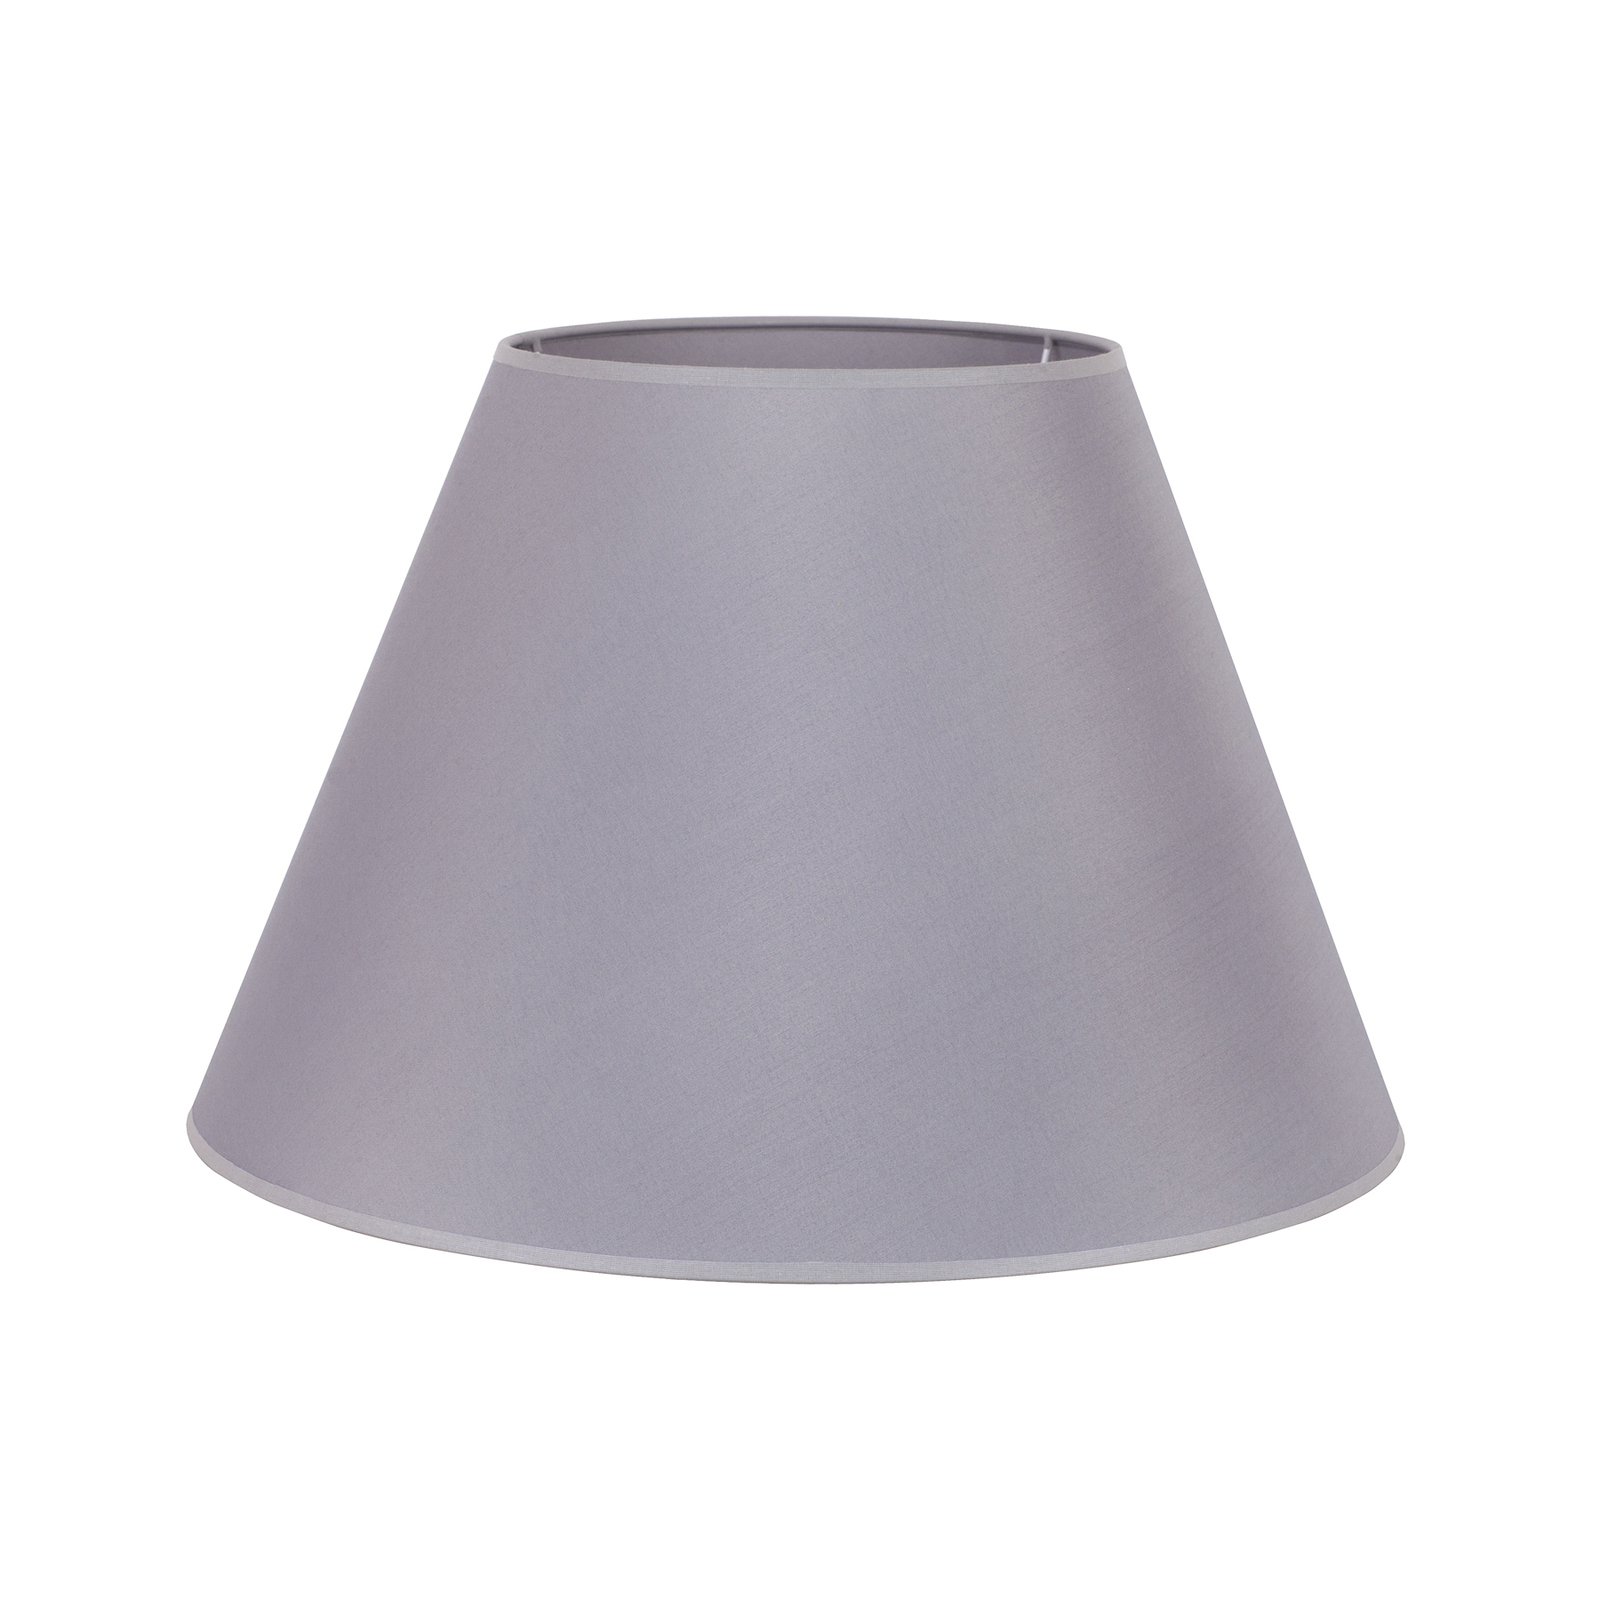 Sofia lampshade height 31 cm, grey/white